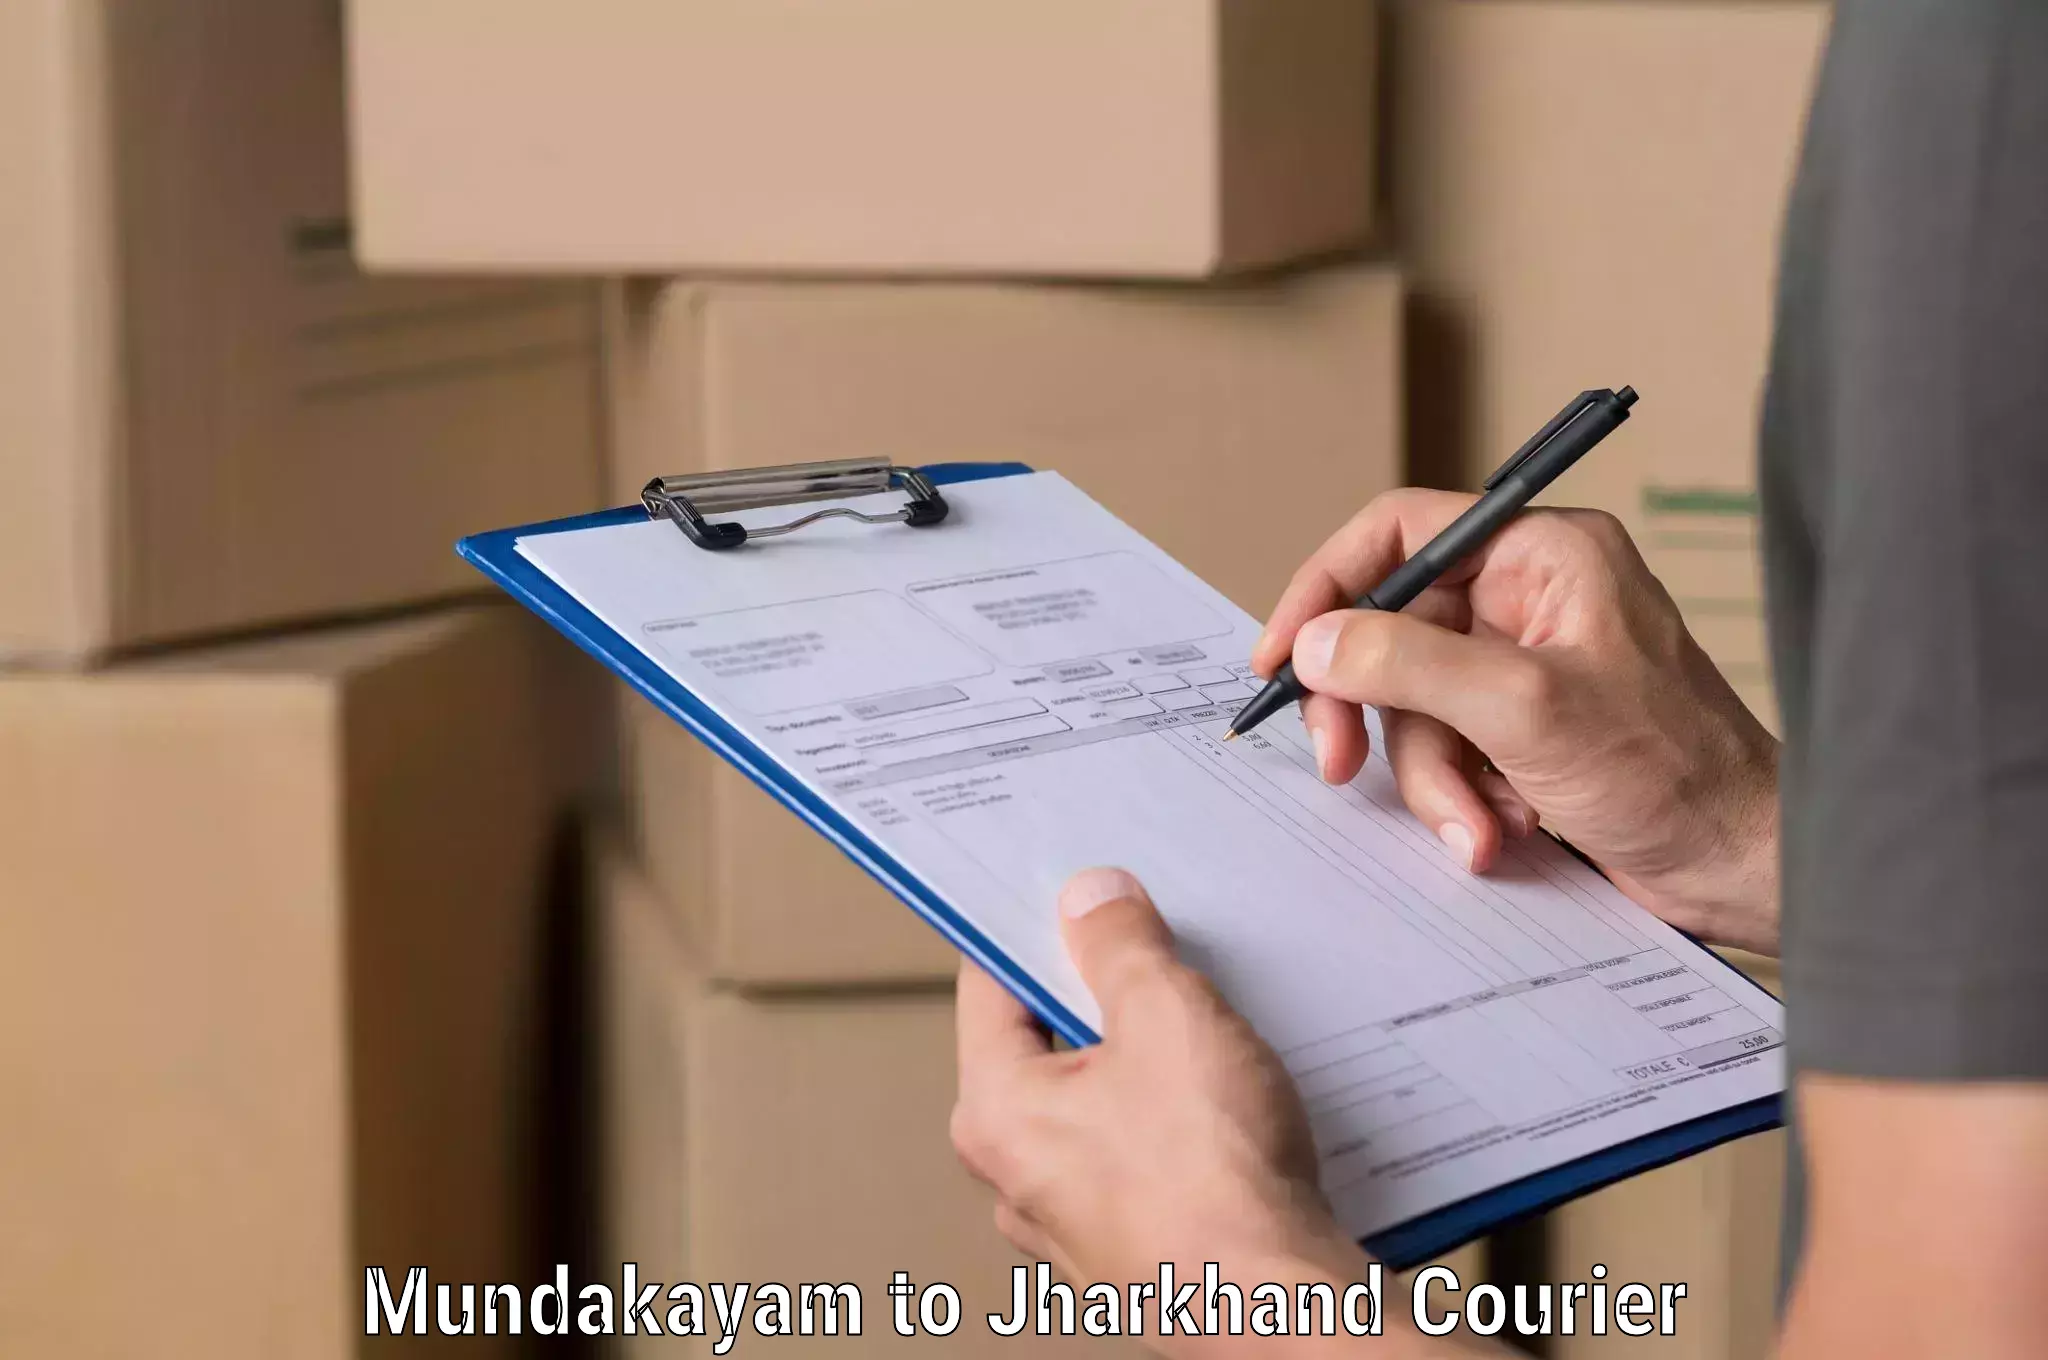 Logistics service provider Mundakayam to Jamshedpur